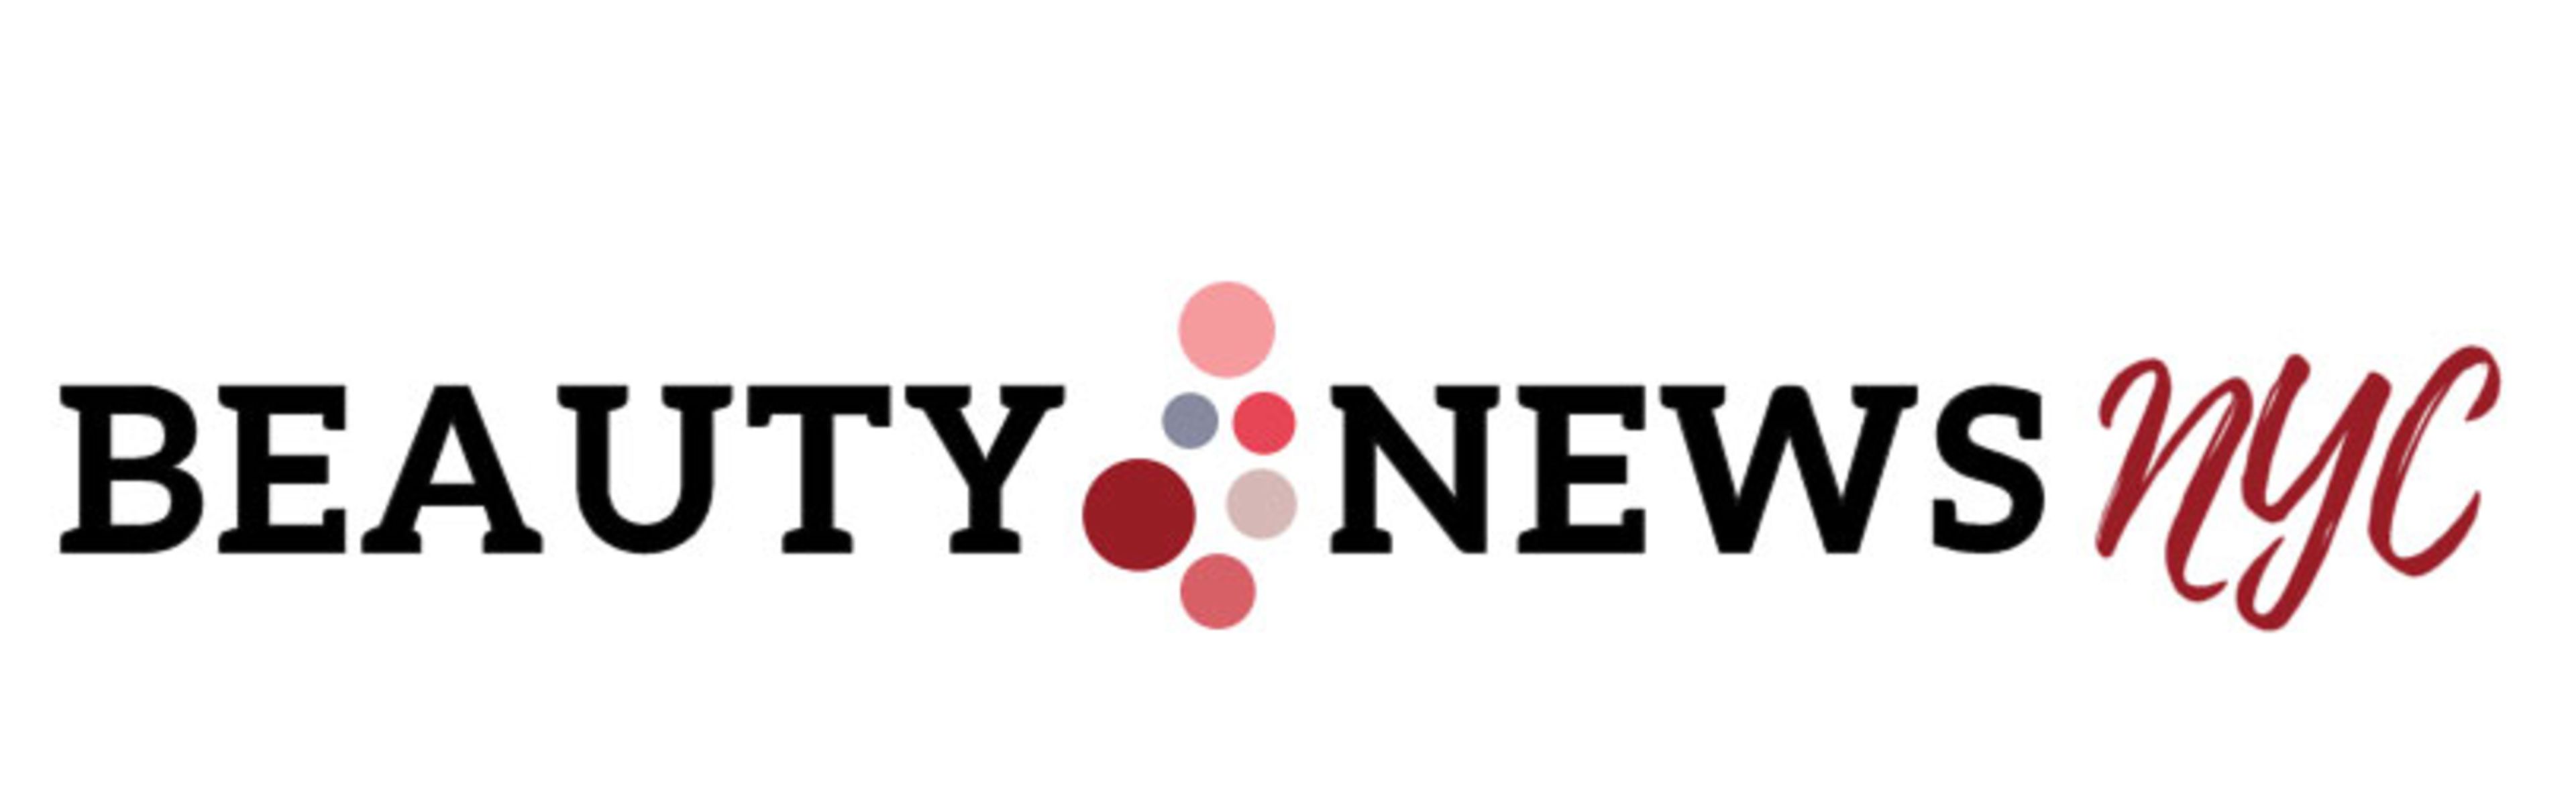 beautynews_logo_new_2020-1.jpg